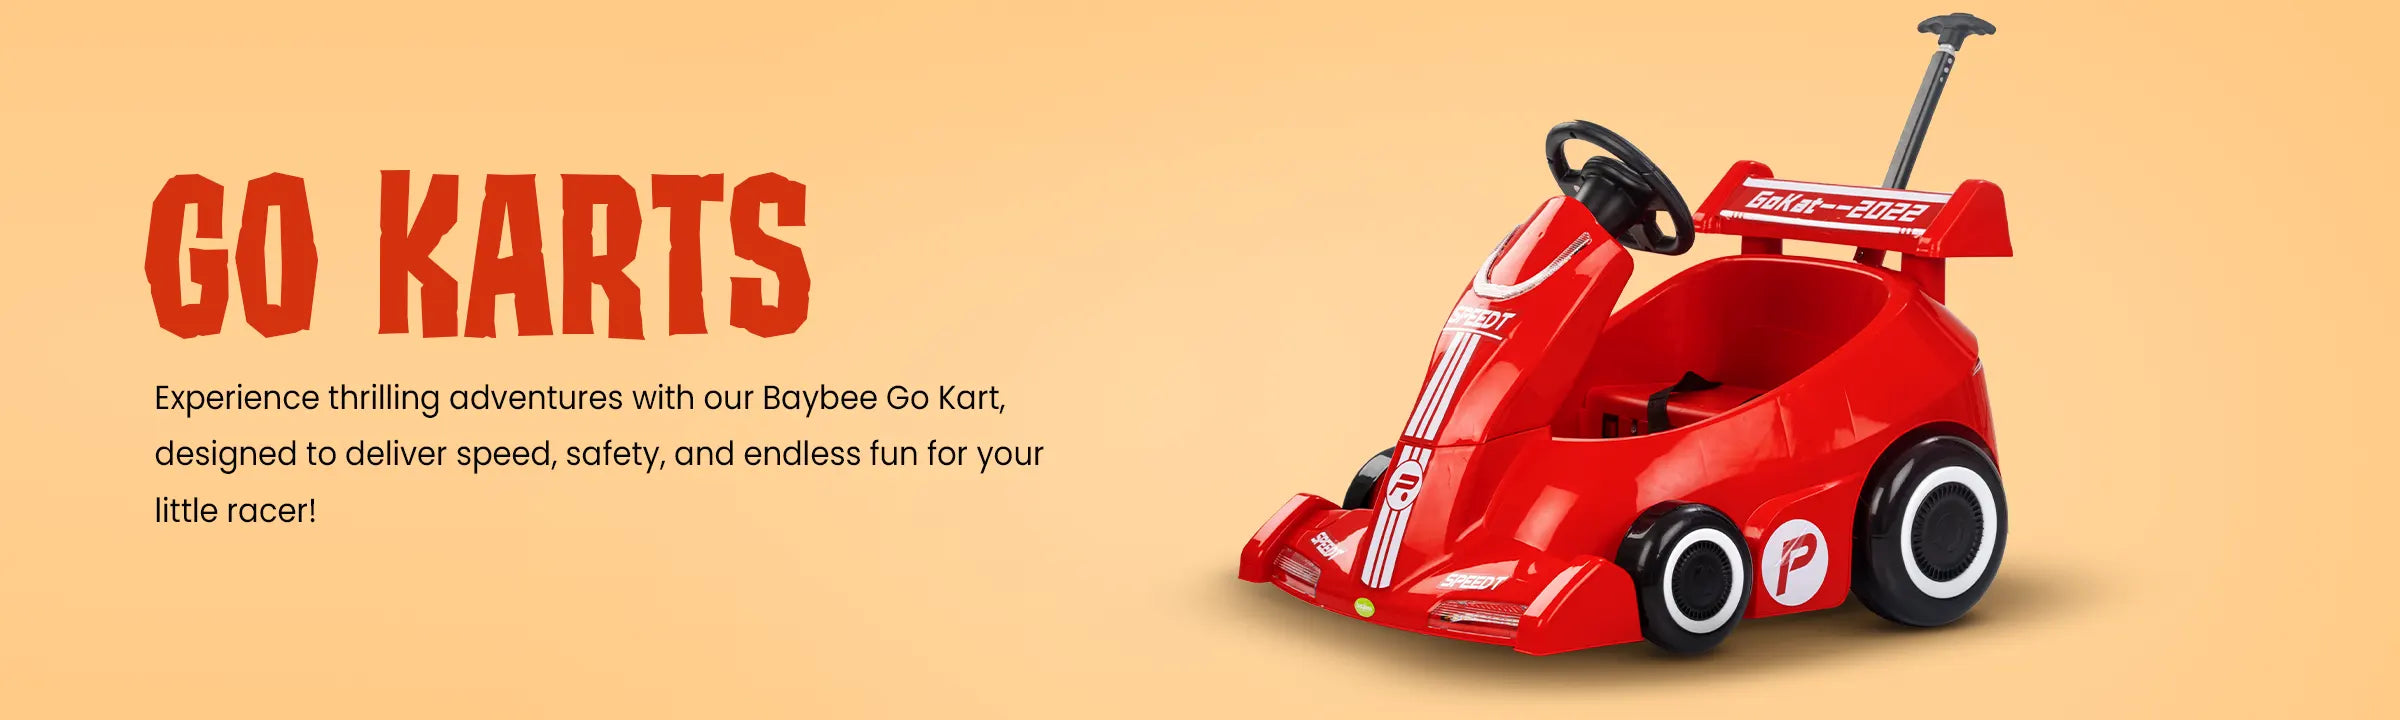 Pedal Go-karts at Best Price in Mumbai, Maharashtra